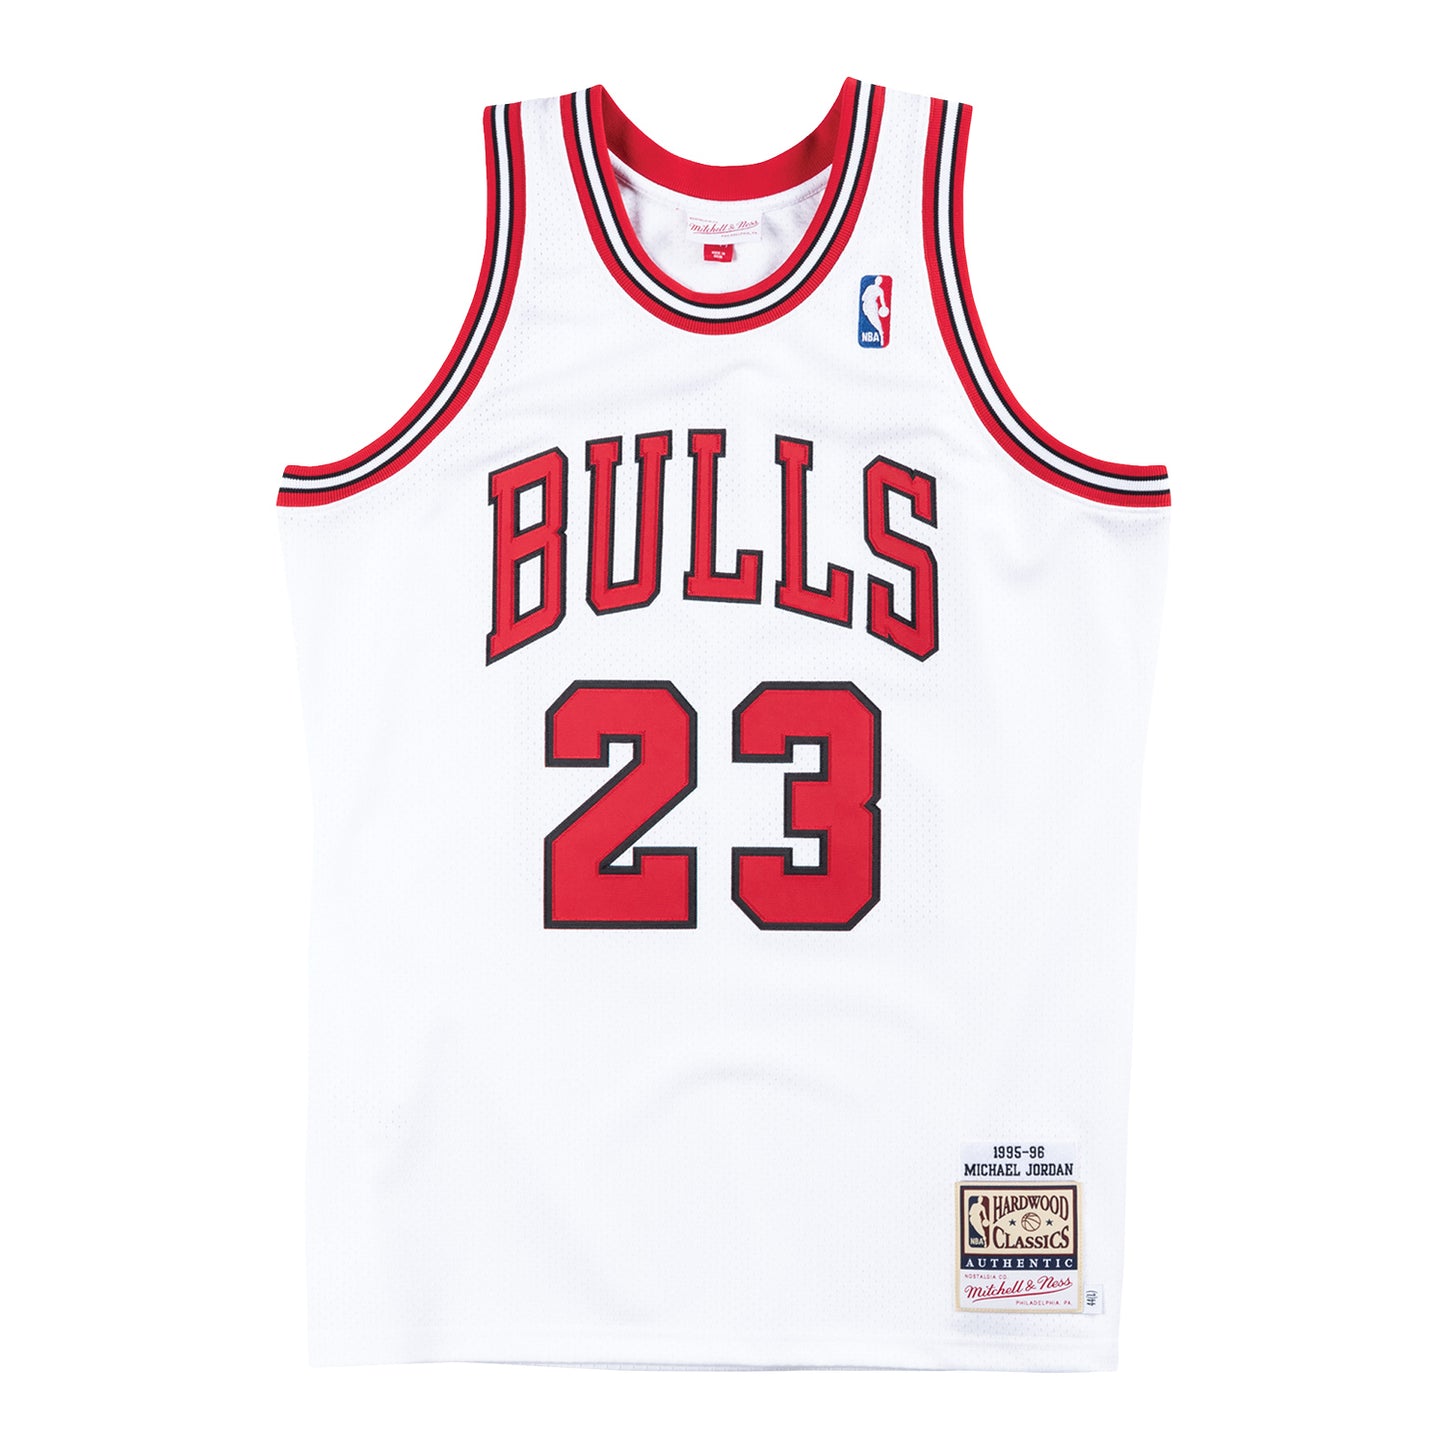 Chicago Bulls Mitchell & Ness Hardwood Classics 1997 NBA Champions